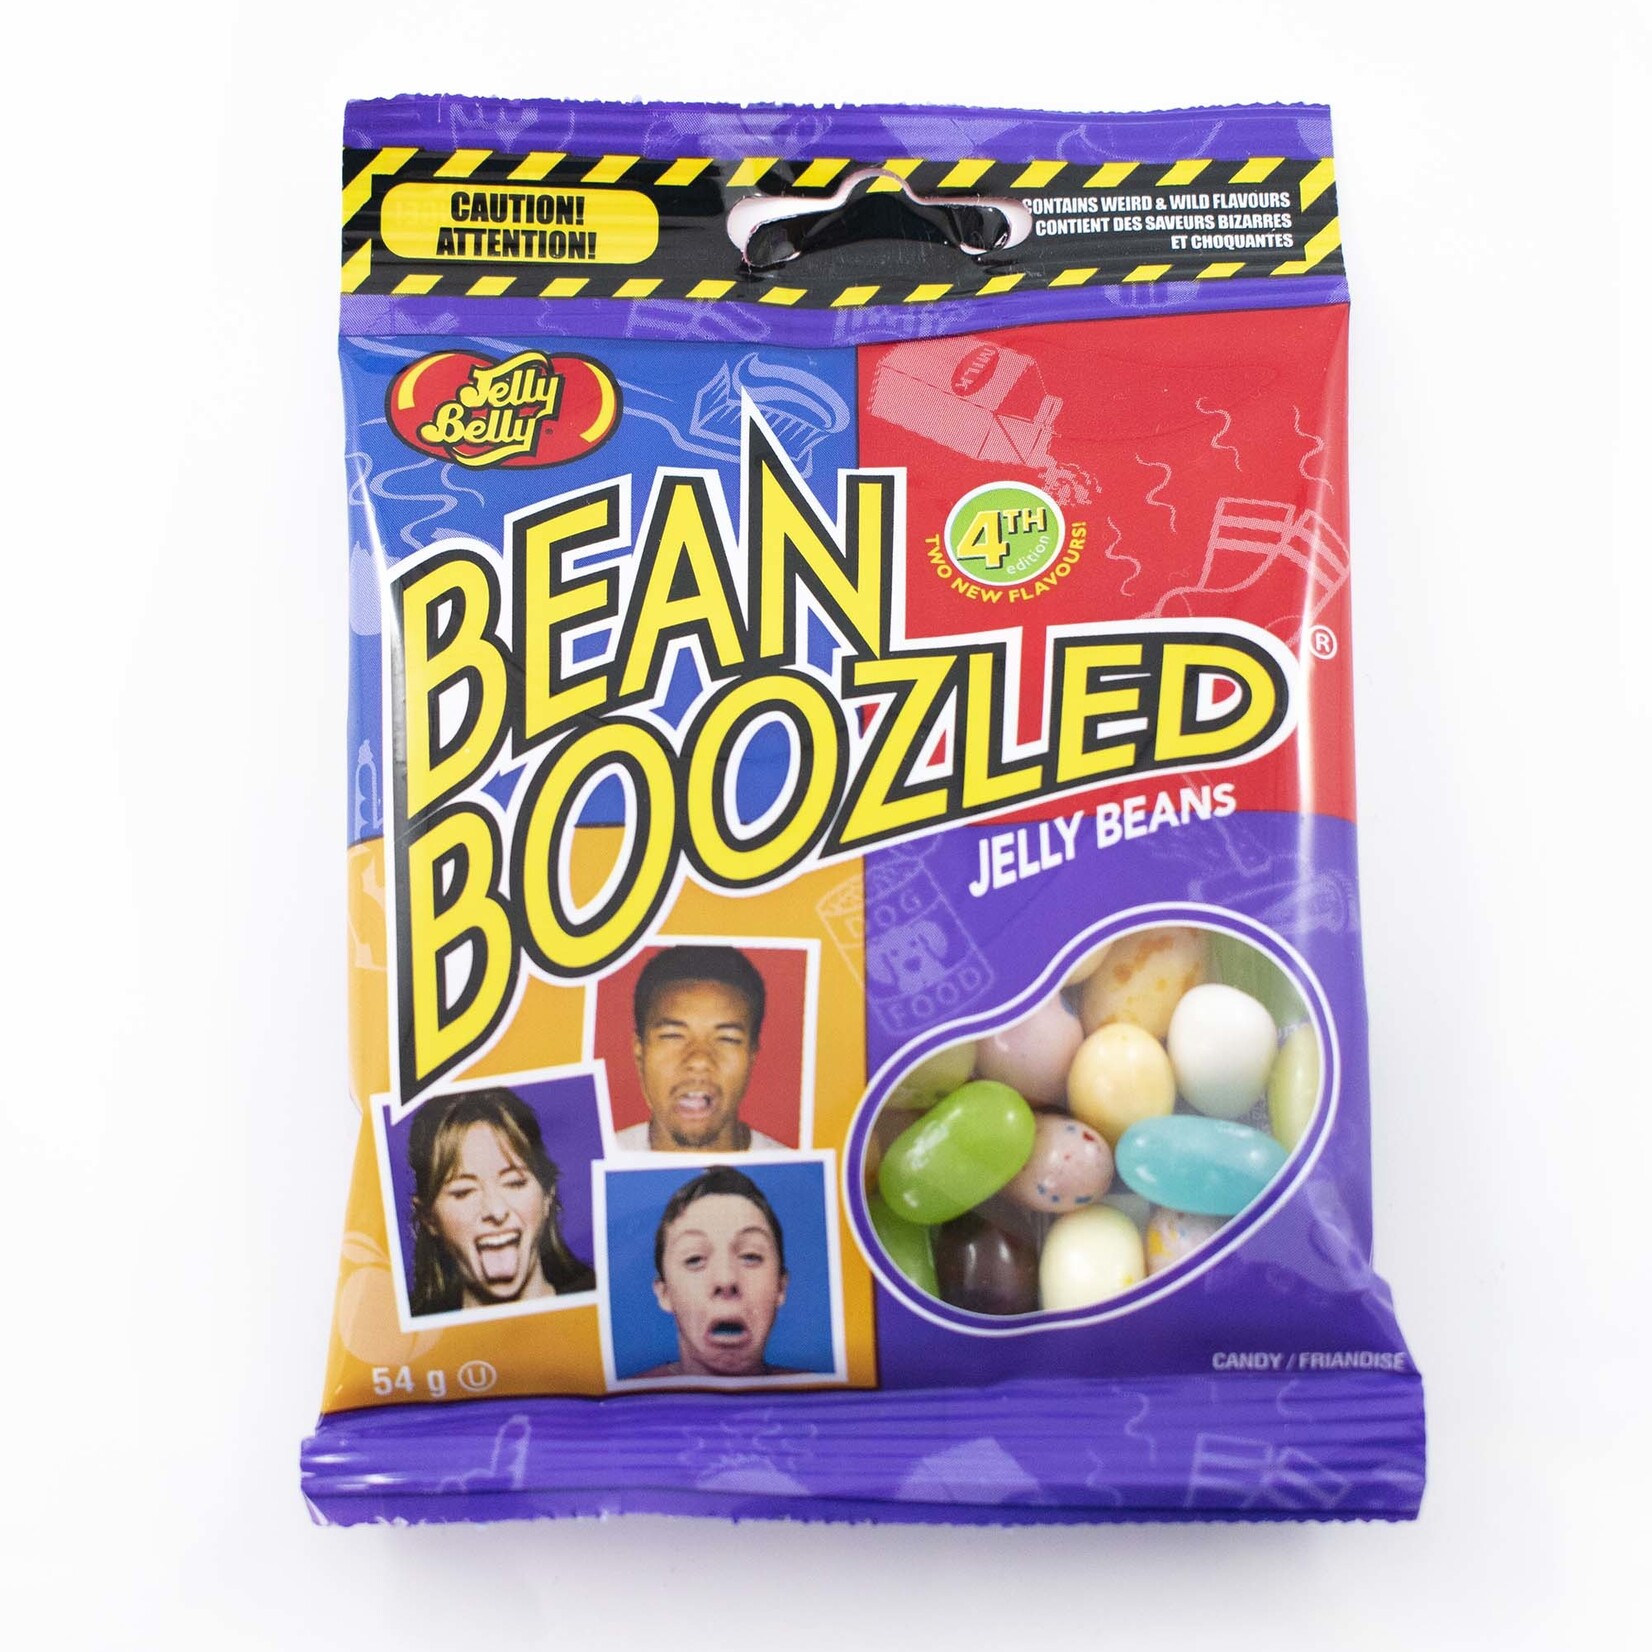 Jelly Belly Bean Boozled 54g